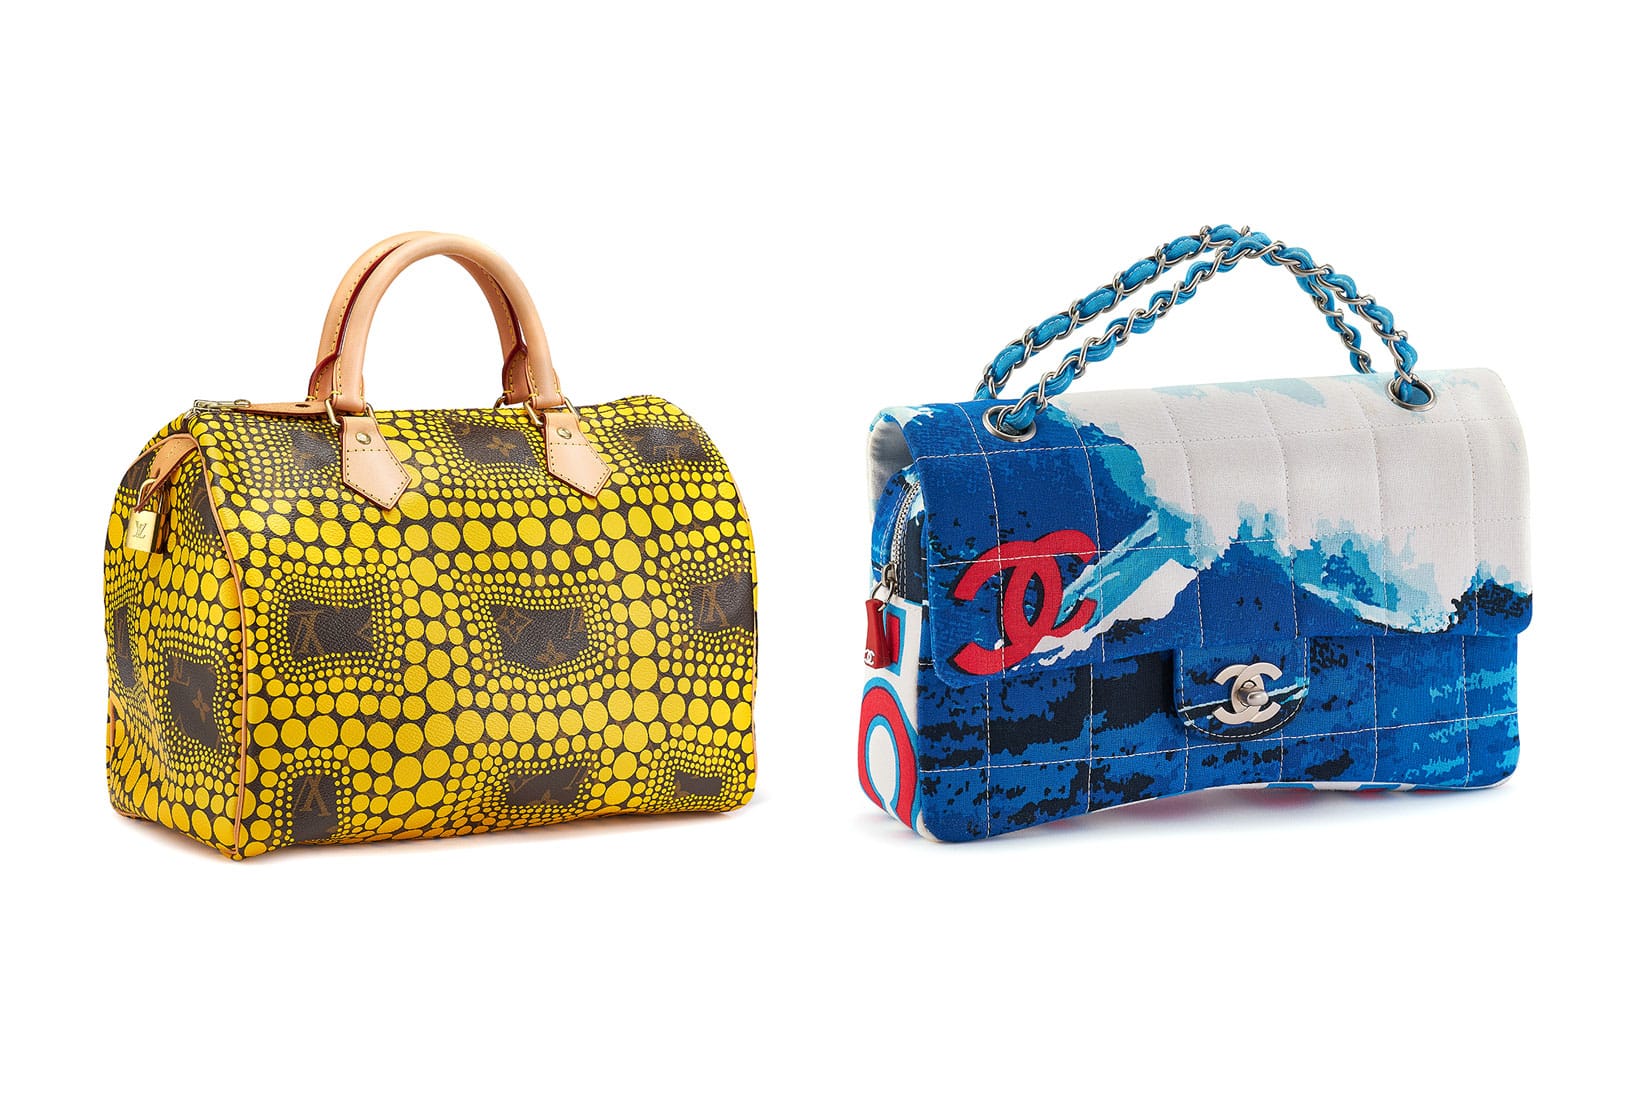 40 Chanel Handbags Sale Images Stock Photos  Vectors  Shutterstock